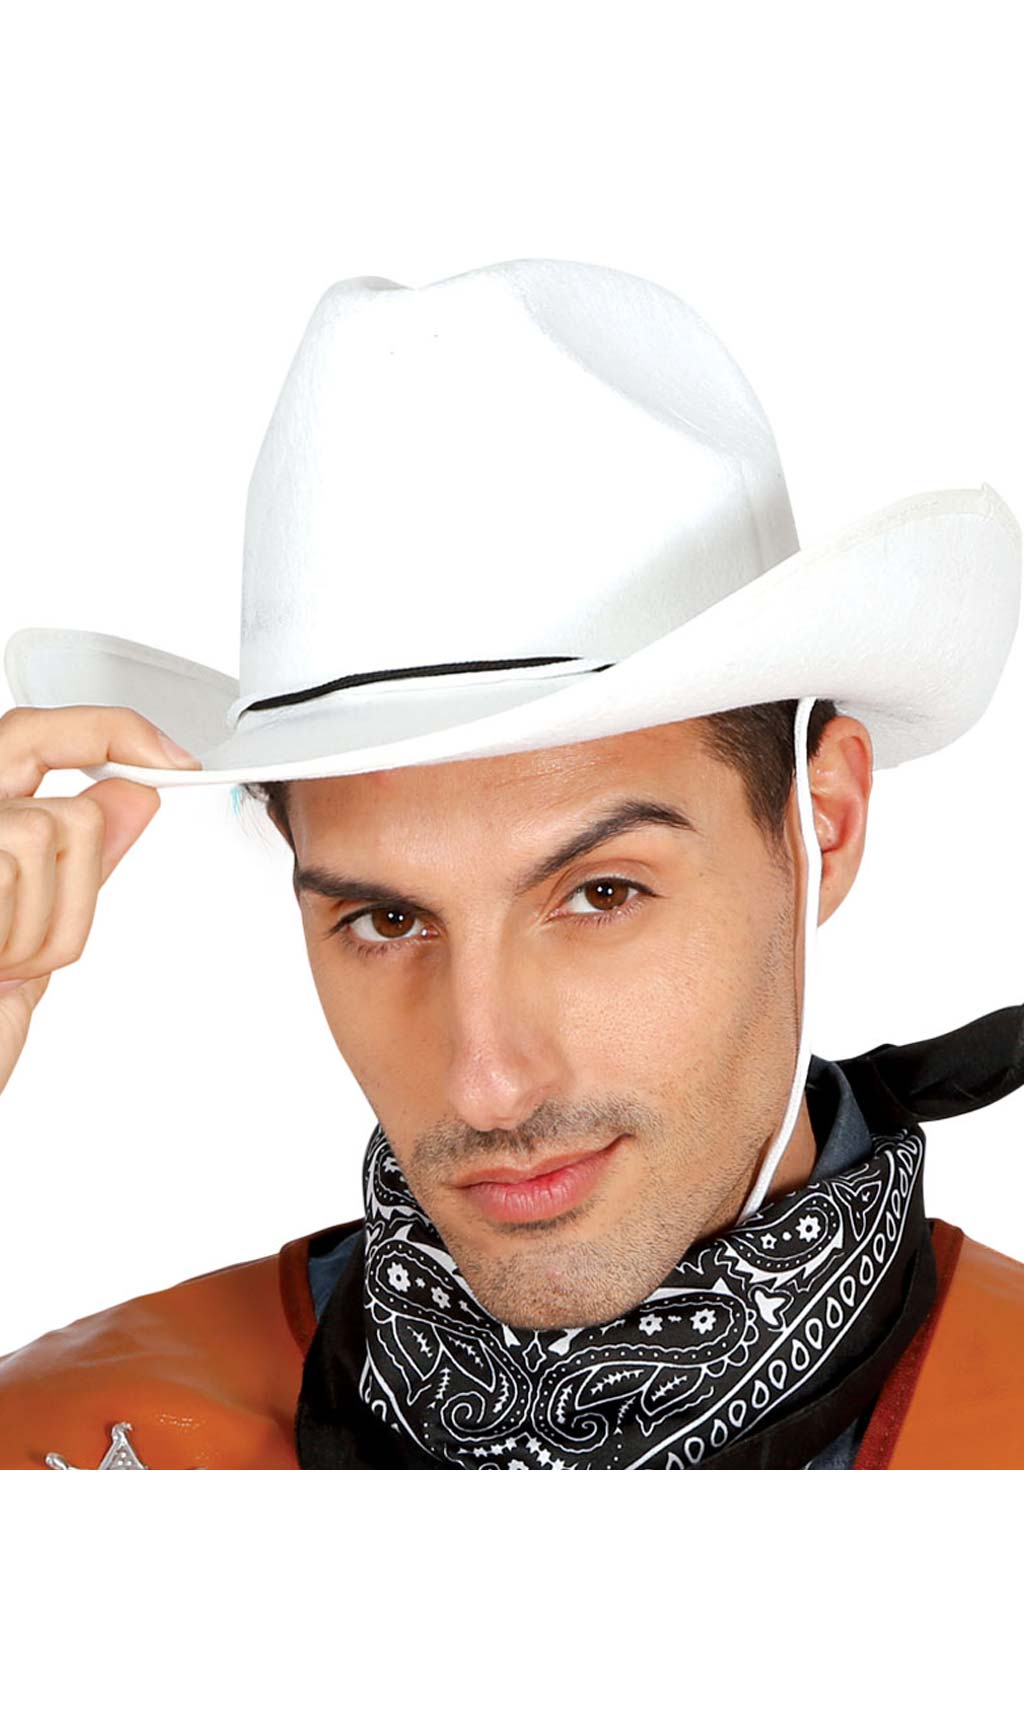 Chapeau Cowboy Blanc